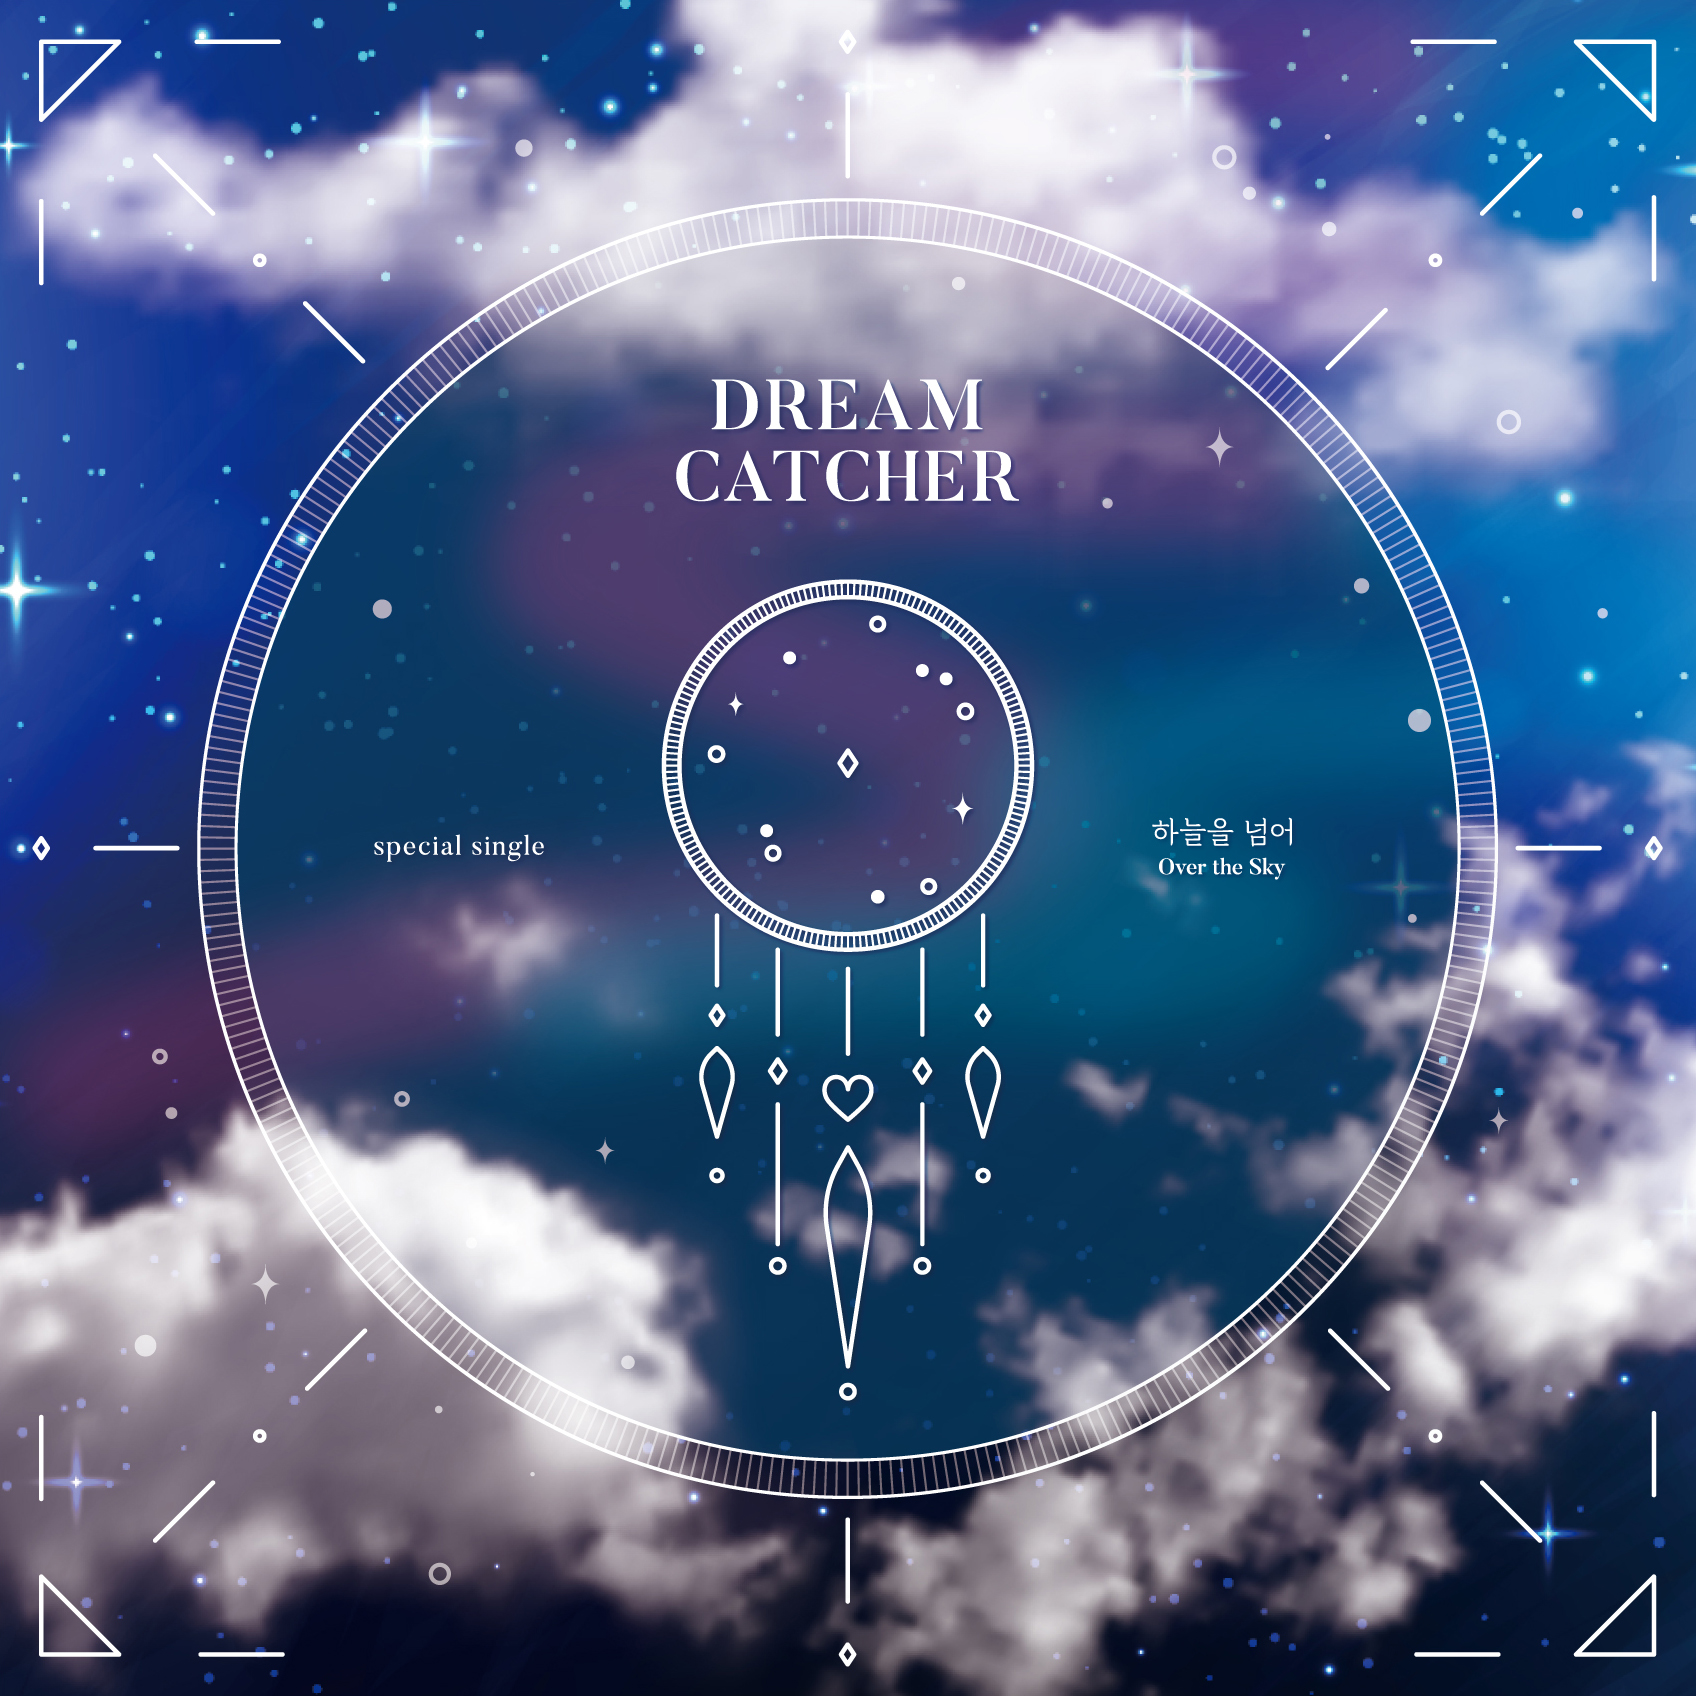 Over the Sky | Dreamcatcher Wiki | Fandom